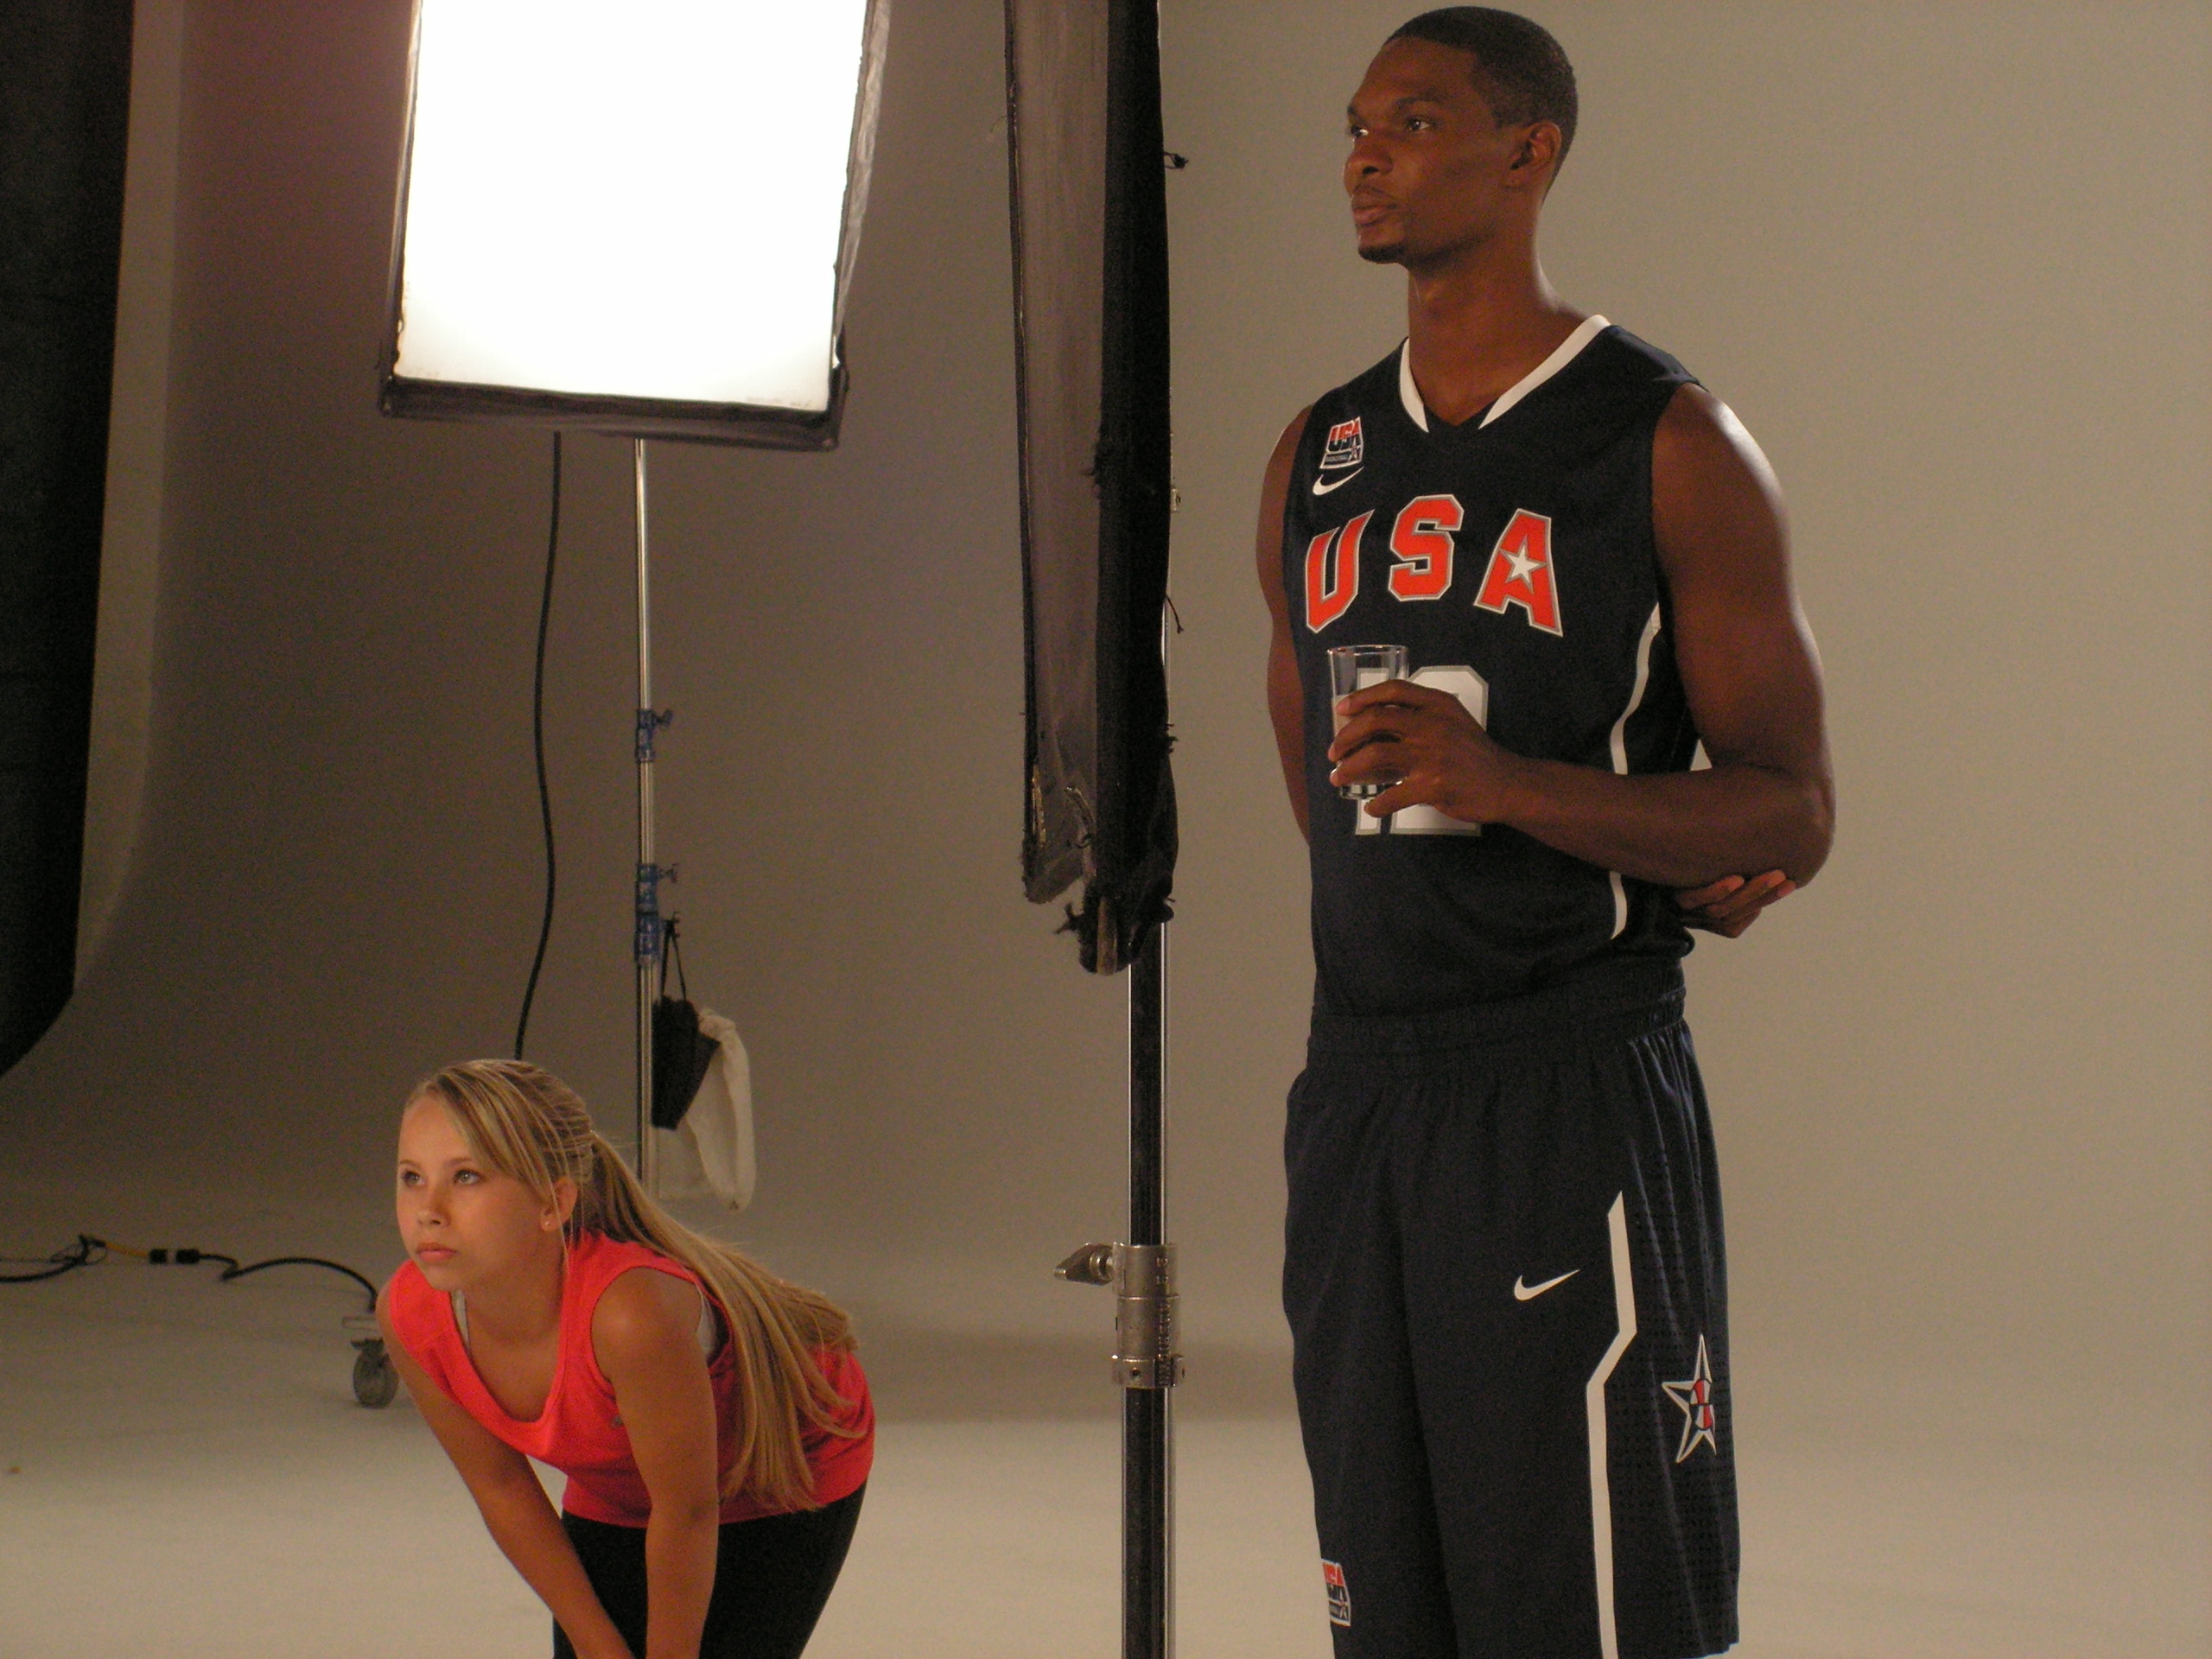 On Set of Got Milk / NBA Commercial. Sadie Brook & Chris Bosh